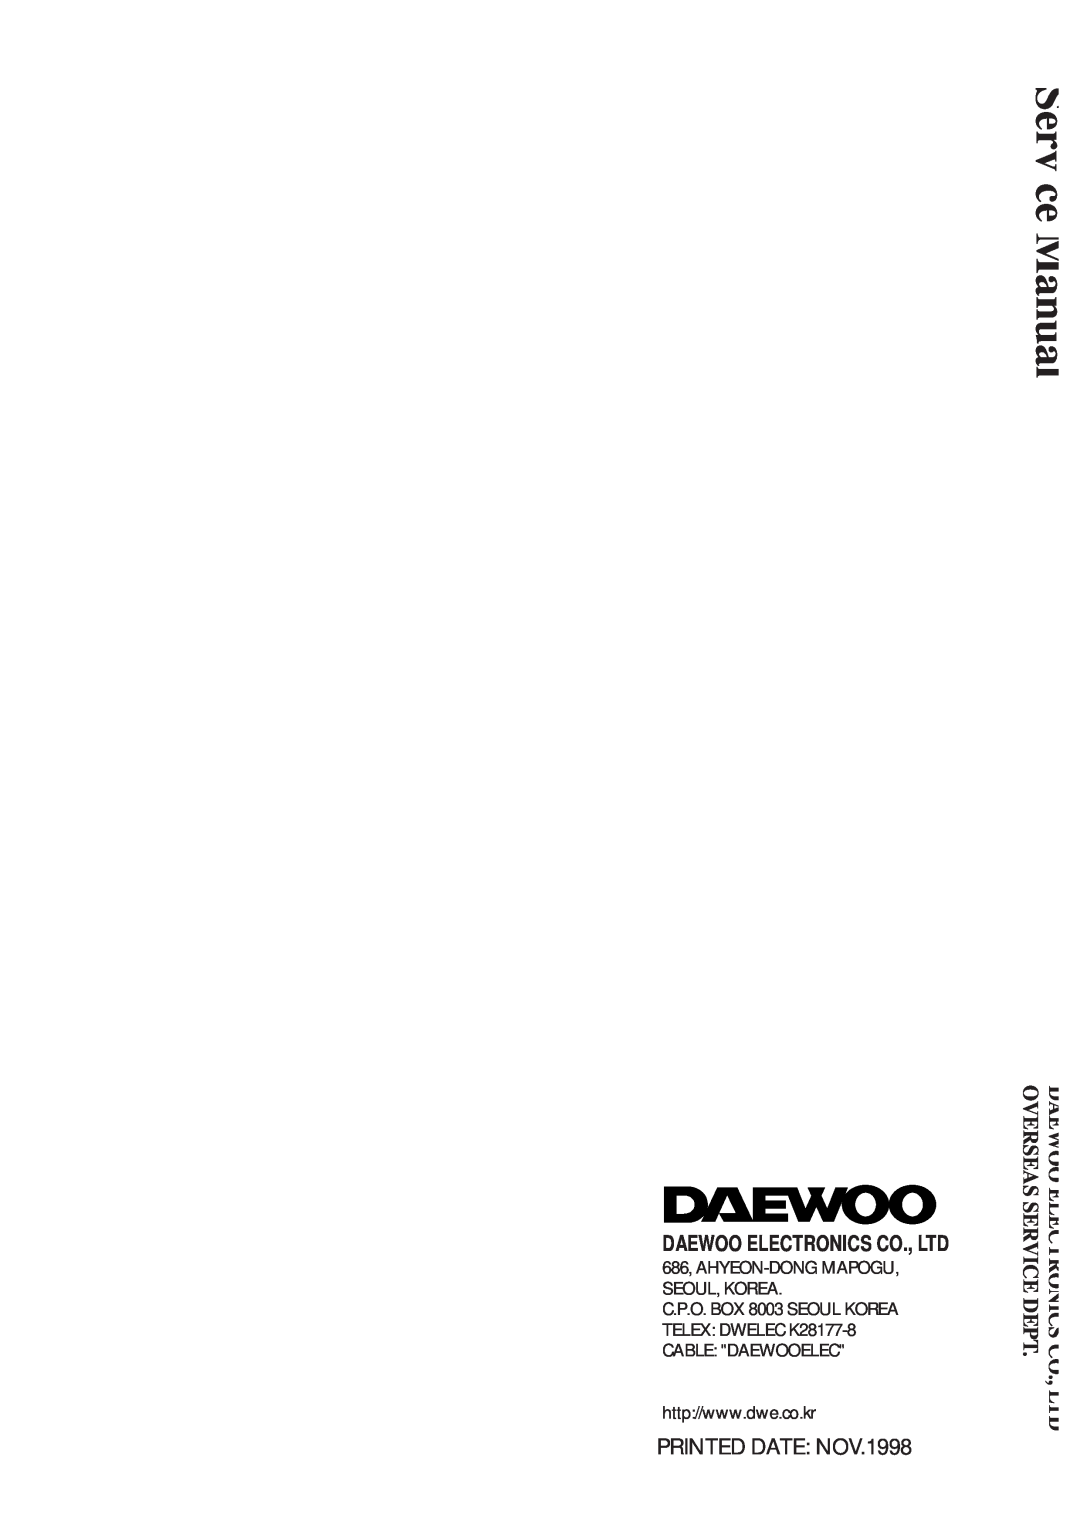 Daewoo 710B Serv ce Manual, PRINTED DATE NOV.1998, Overseas Service Dept, Daewoo Electronics Co, Cable Daewooelec 